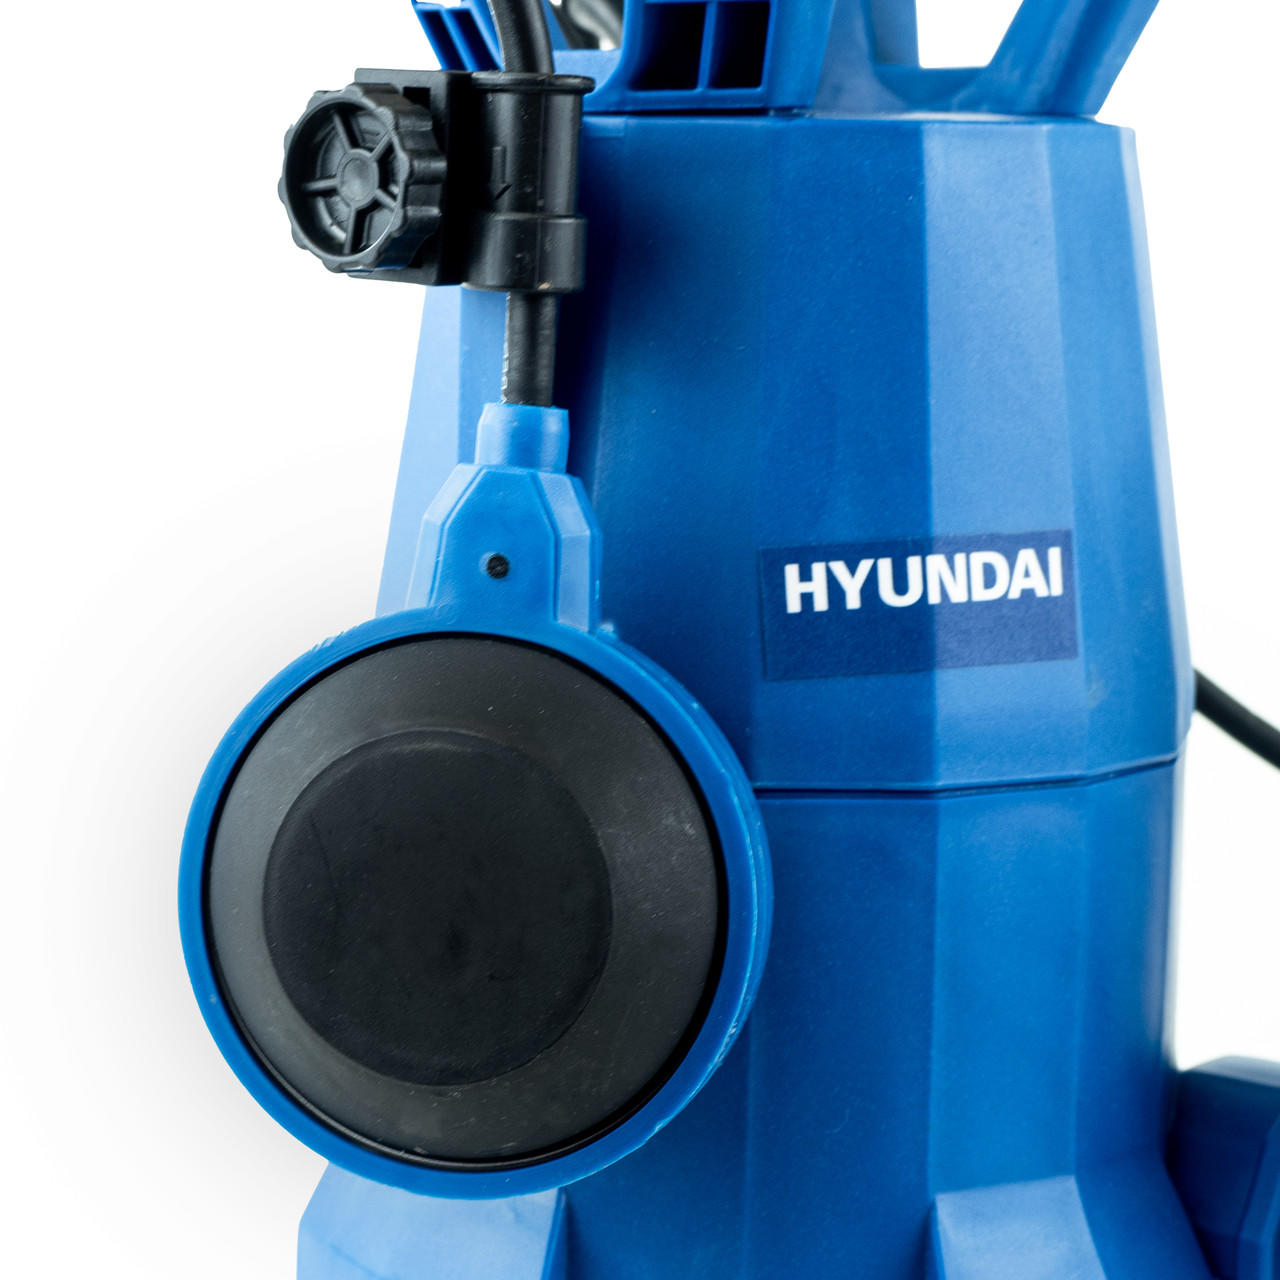 Hyundai HYSP550CD Electric Submersible Water Pump - 550W